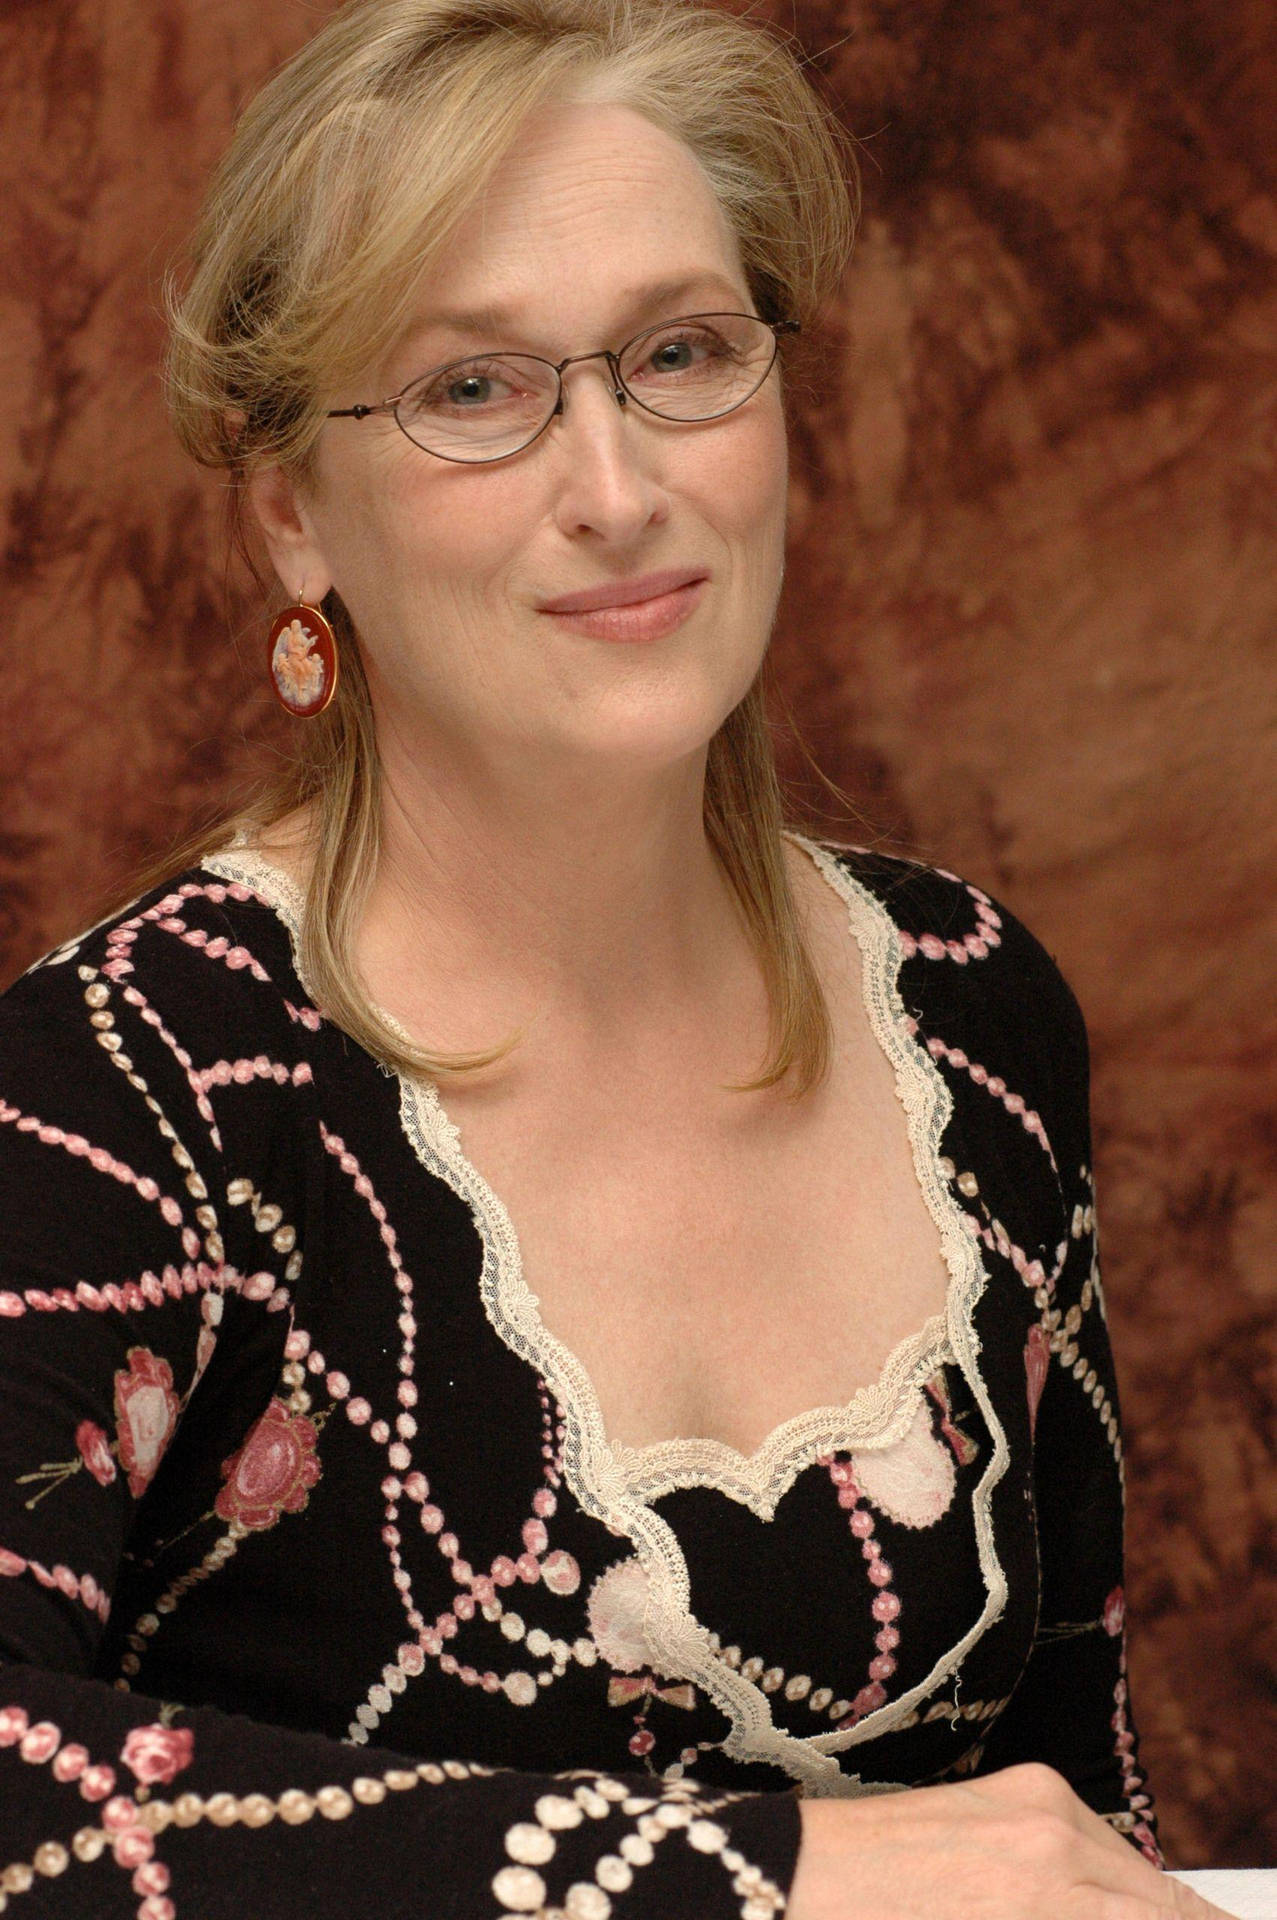 Meryl Streep With Specs Background